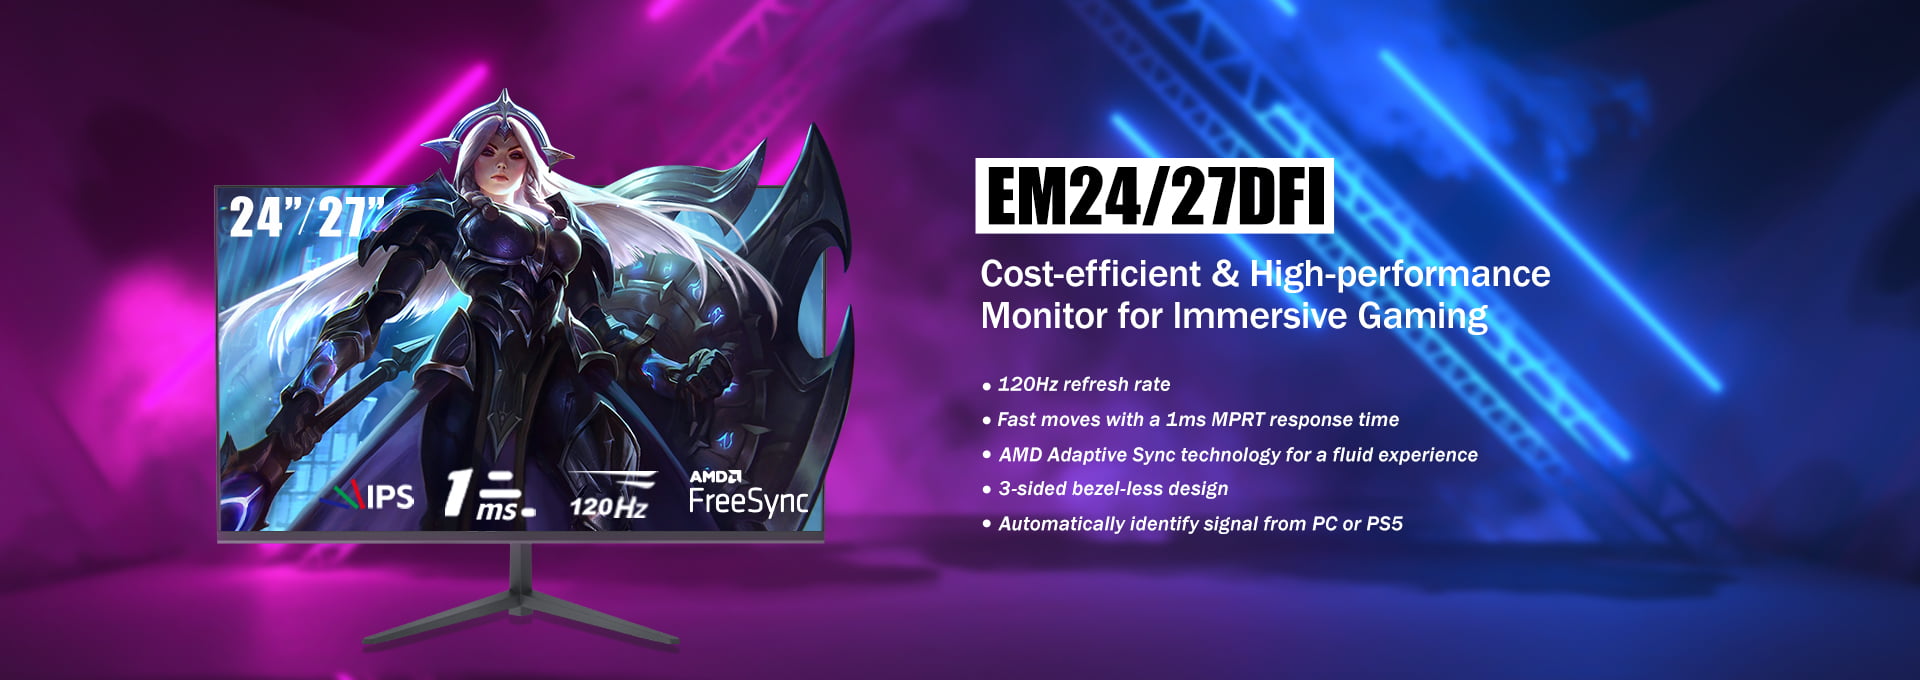 144hz Gaming Monitor, Curved Gaming Monitor - Perfect Display